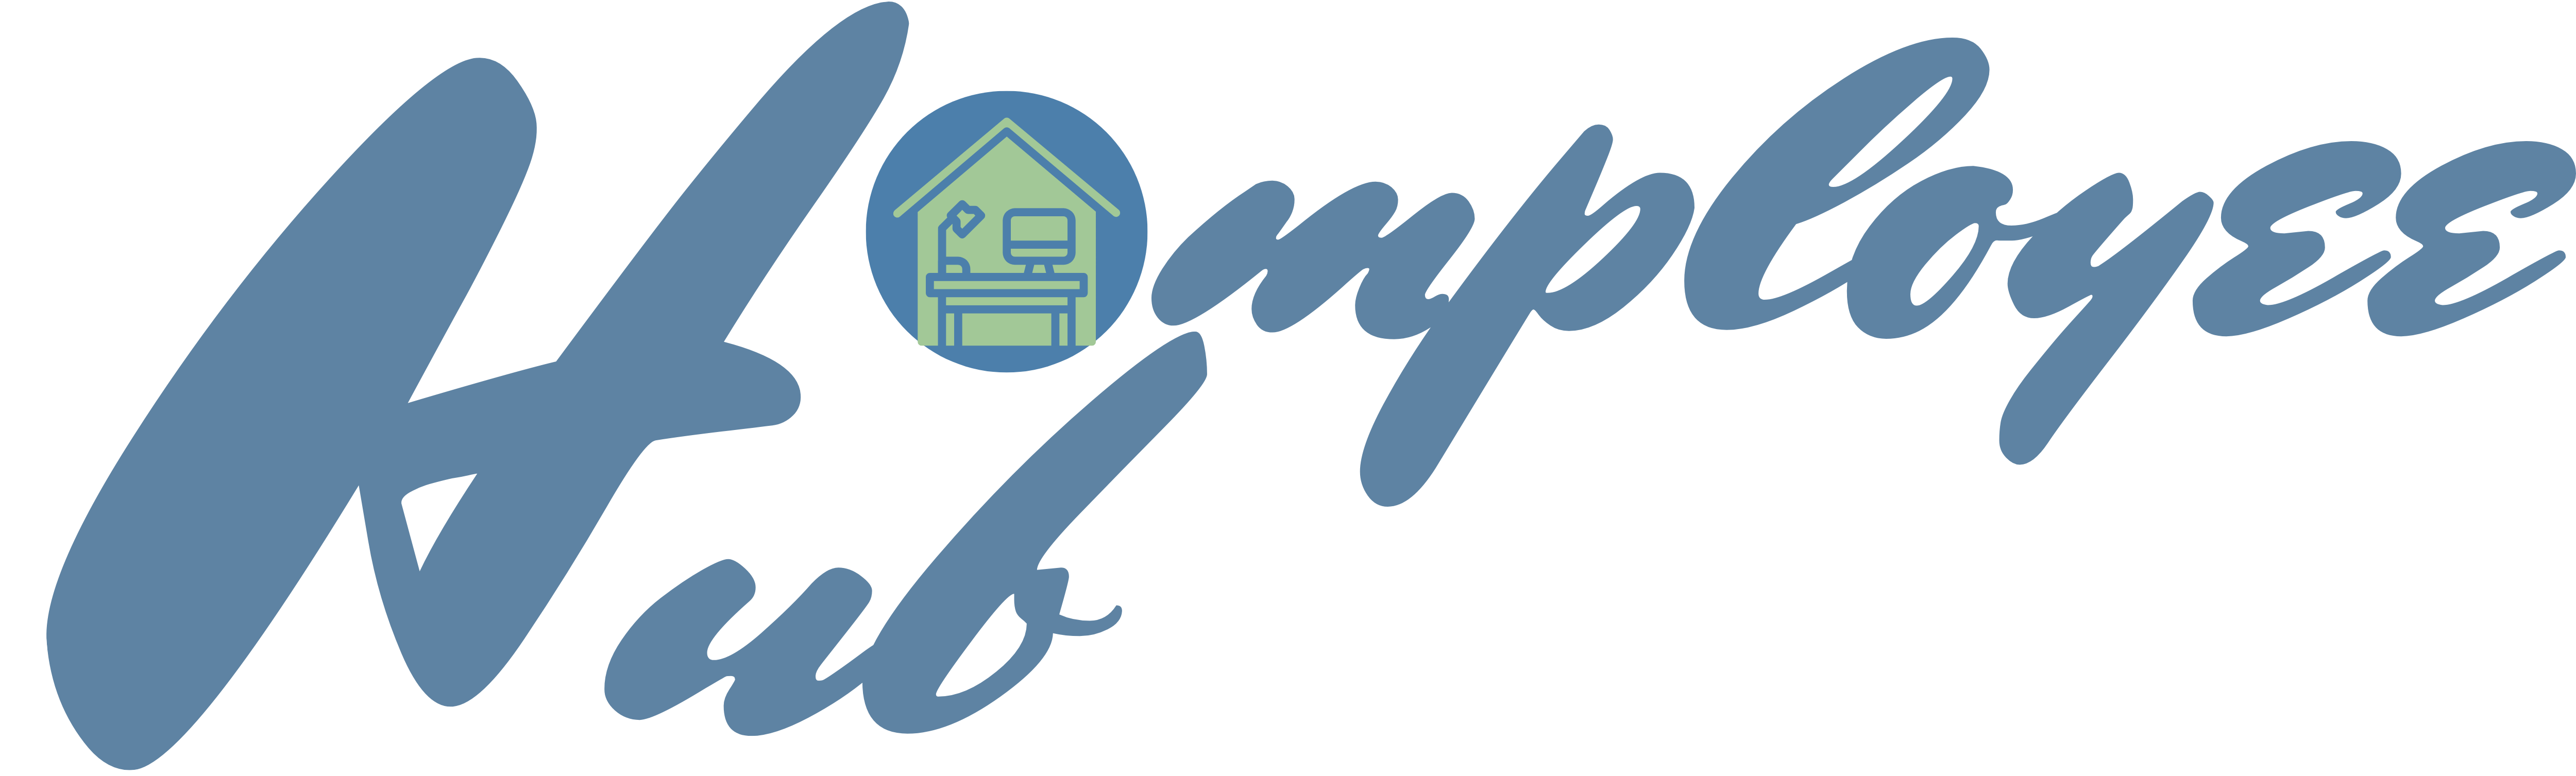 HomployeeHub Logo